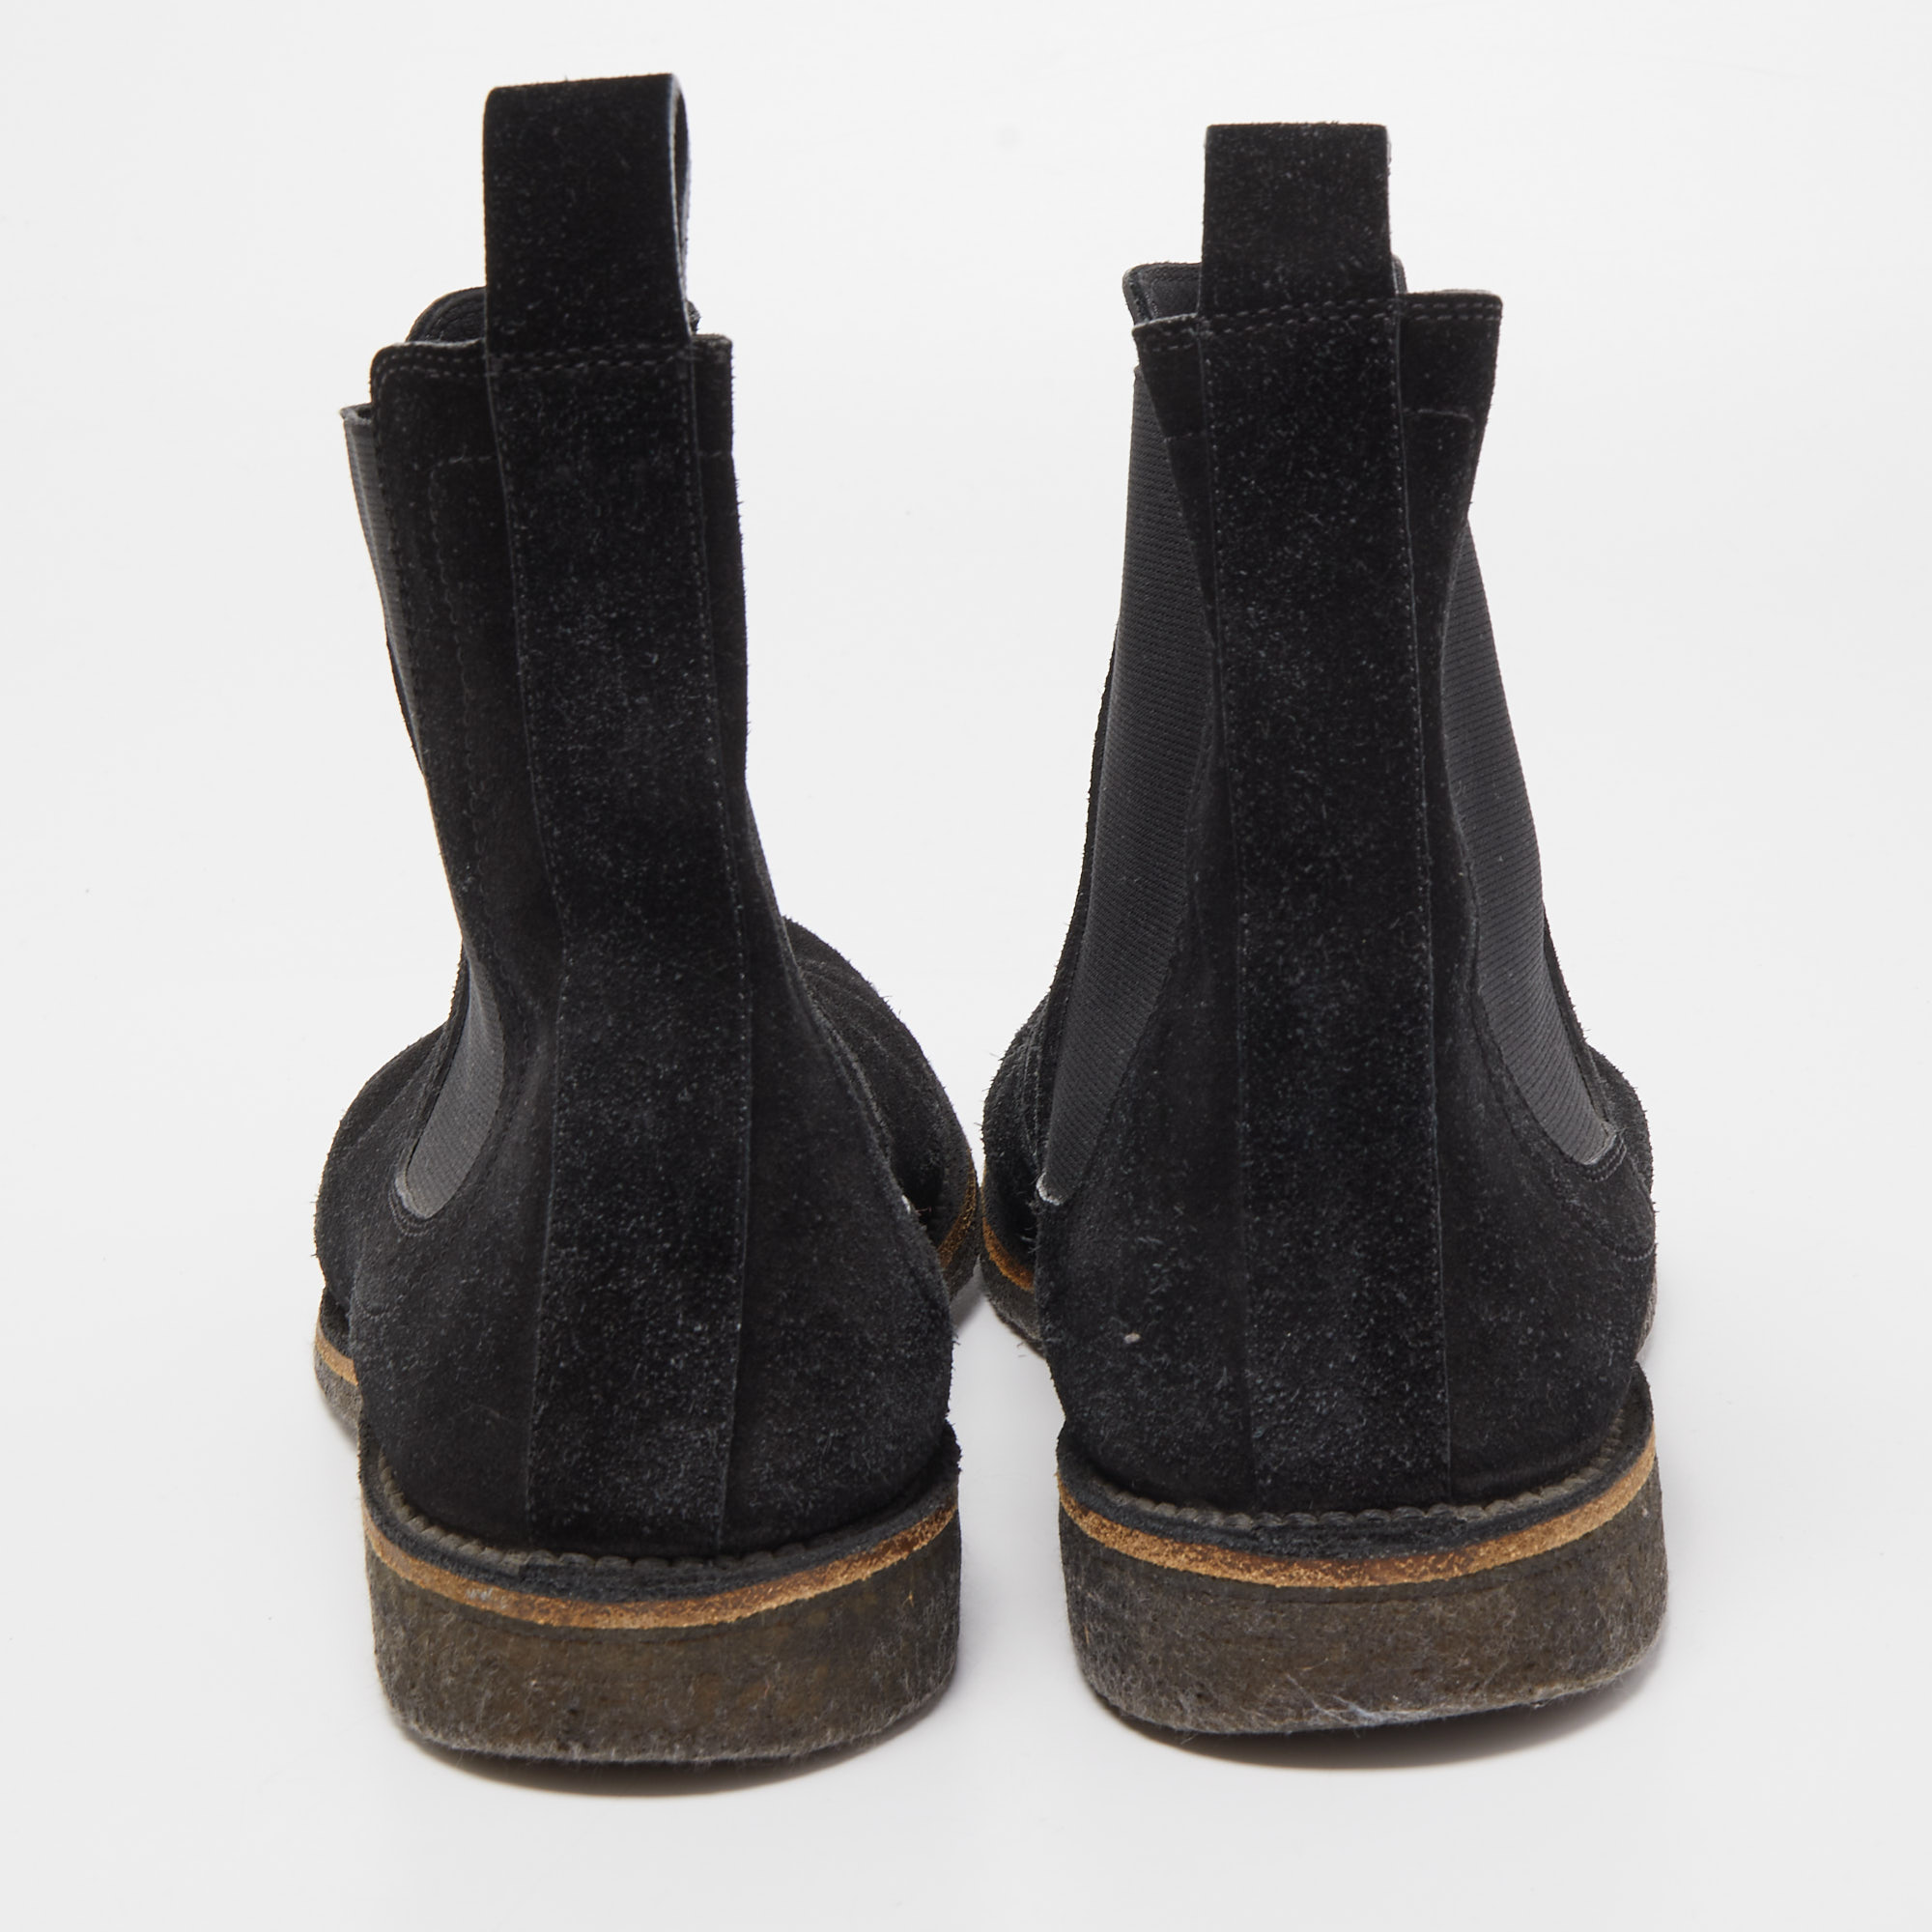 Bottega Veneta Black Suede Chelsea Ankle Boots Size 40